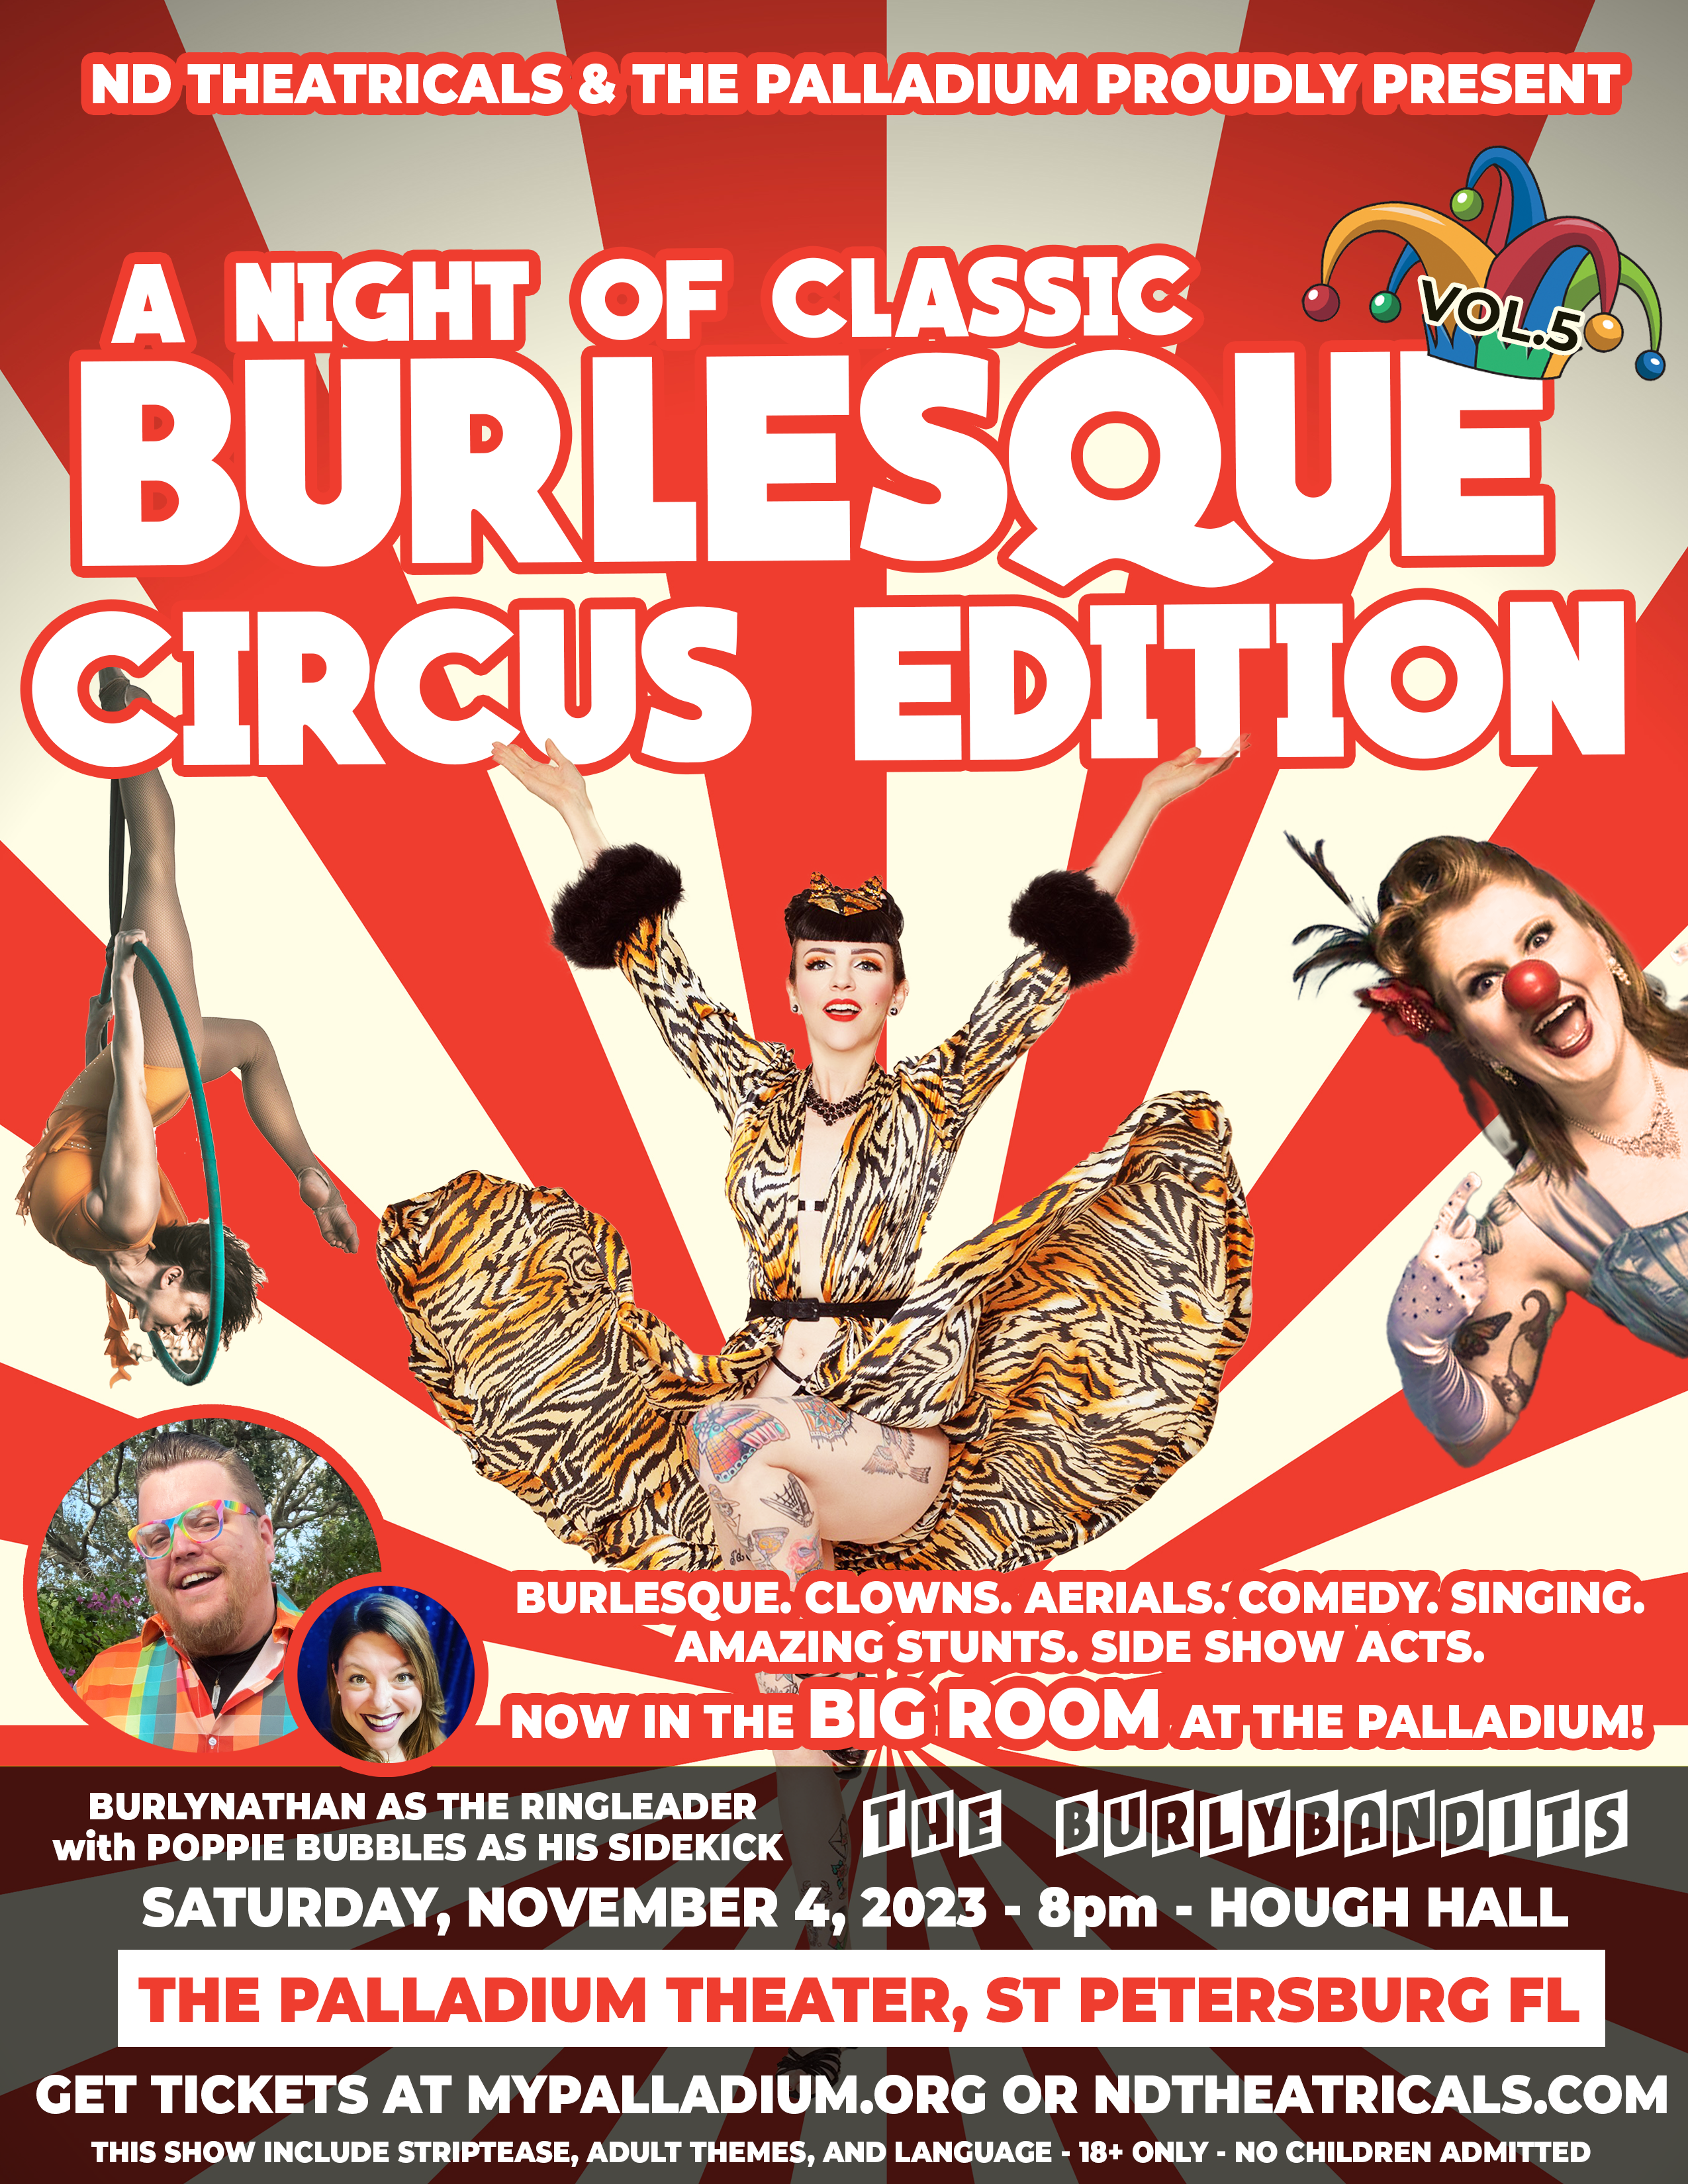 A Night of Classic Burlesque, Vol. 5 Circus Edition - St. Petersburg, Florida - The Palladium Theater